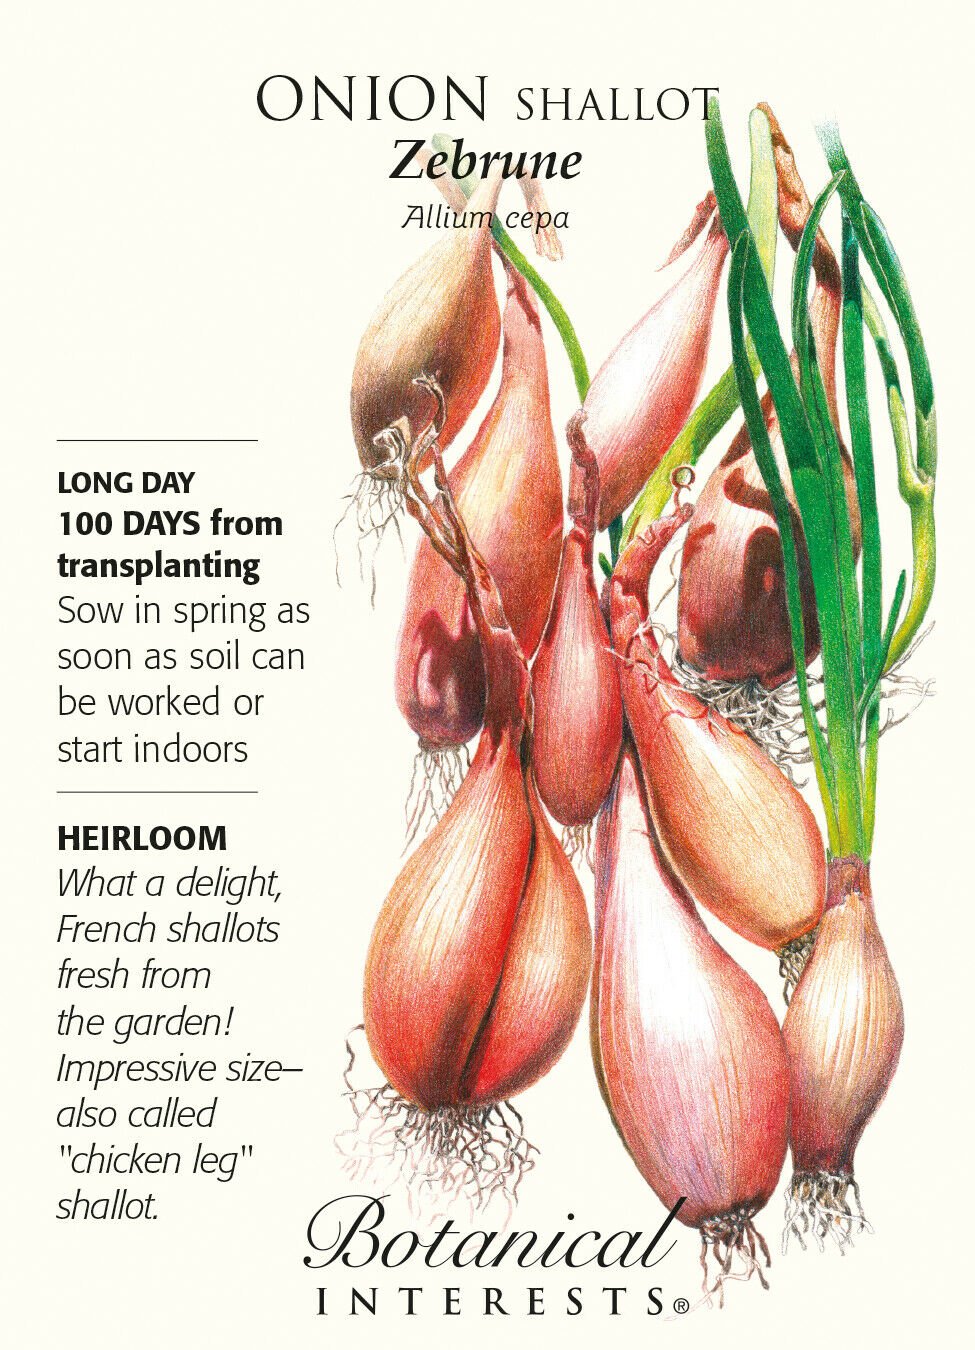 Zebrune Shallot Onion Seeds - 350 mg